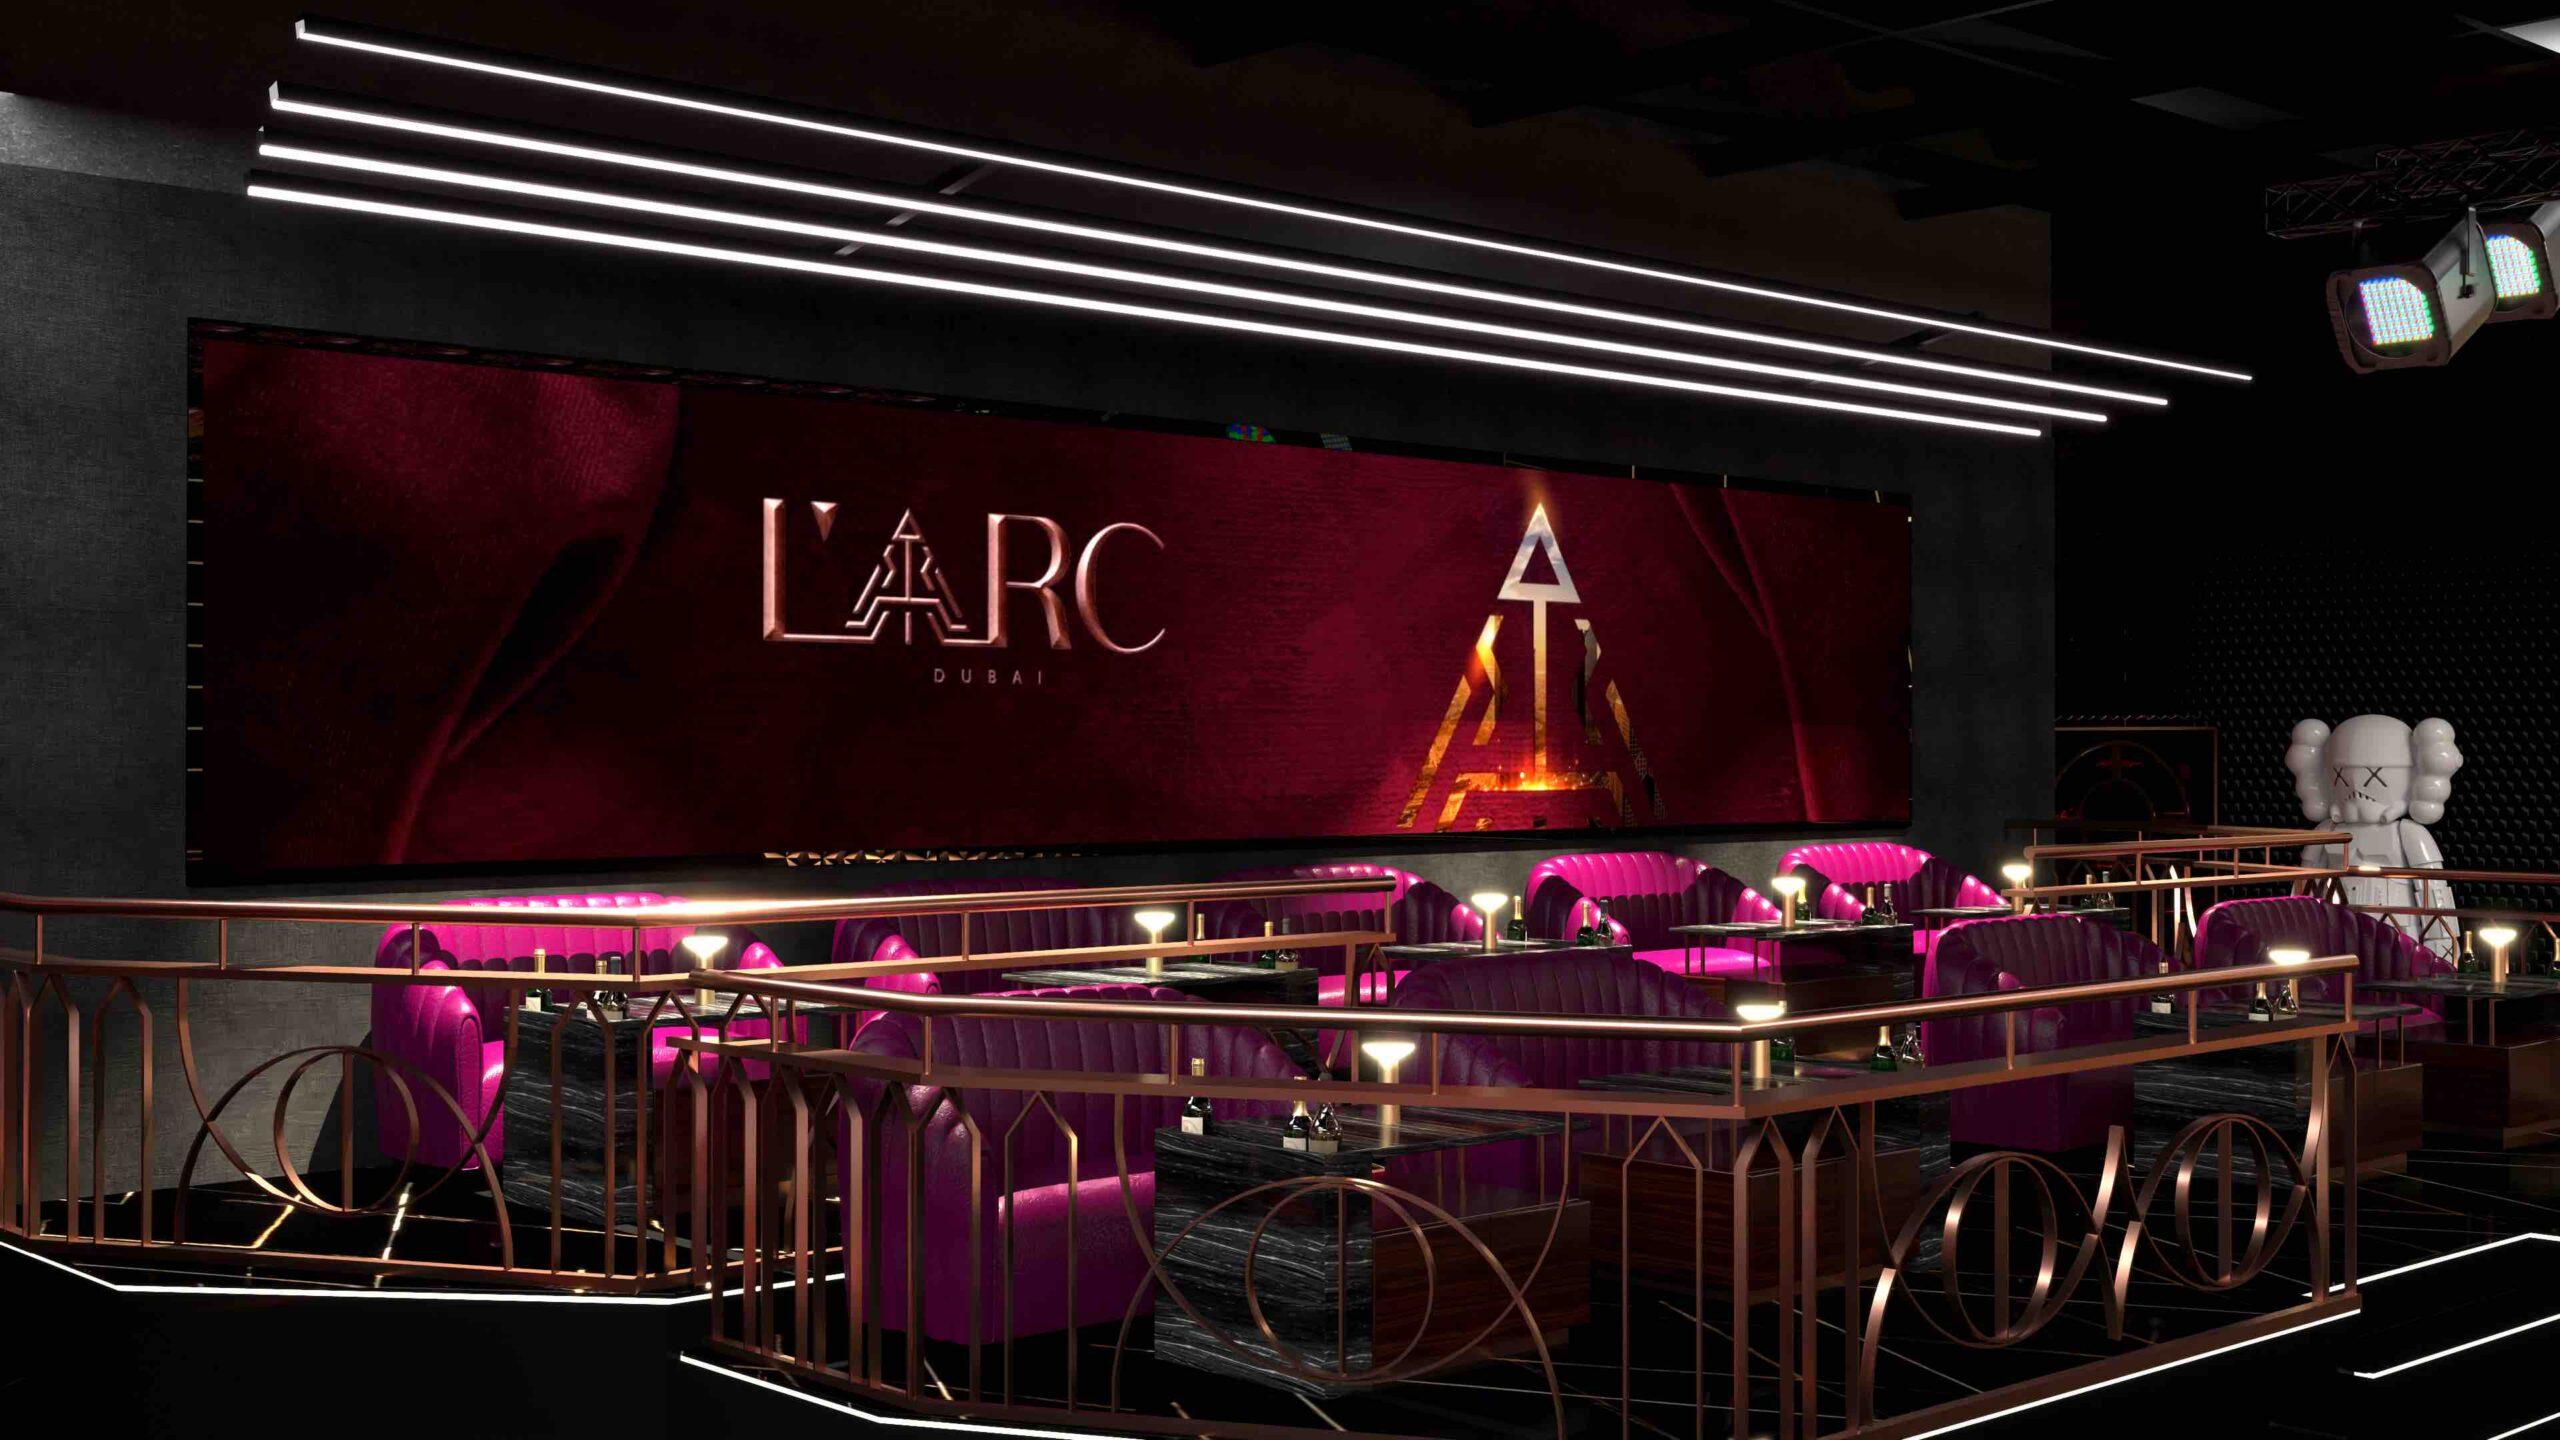 Can this new nightclub revolutionise nightlife in Dubai?